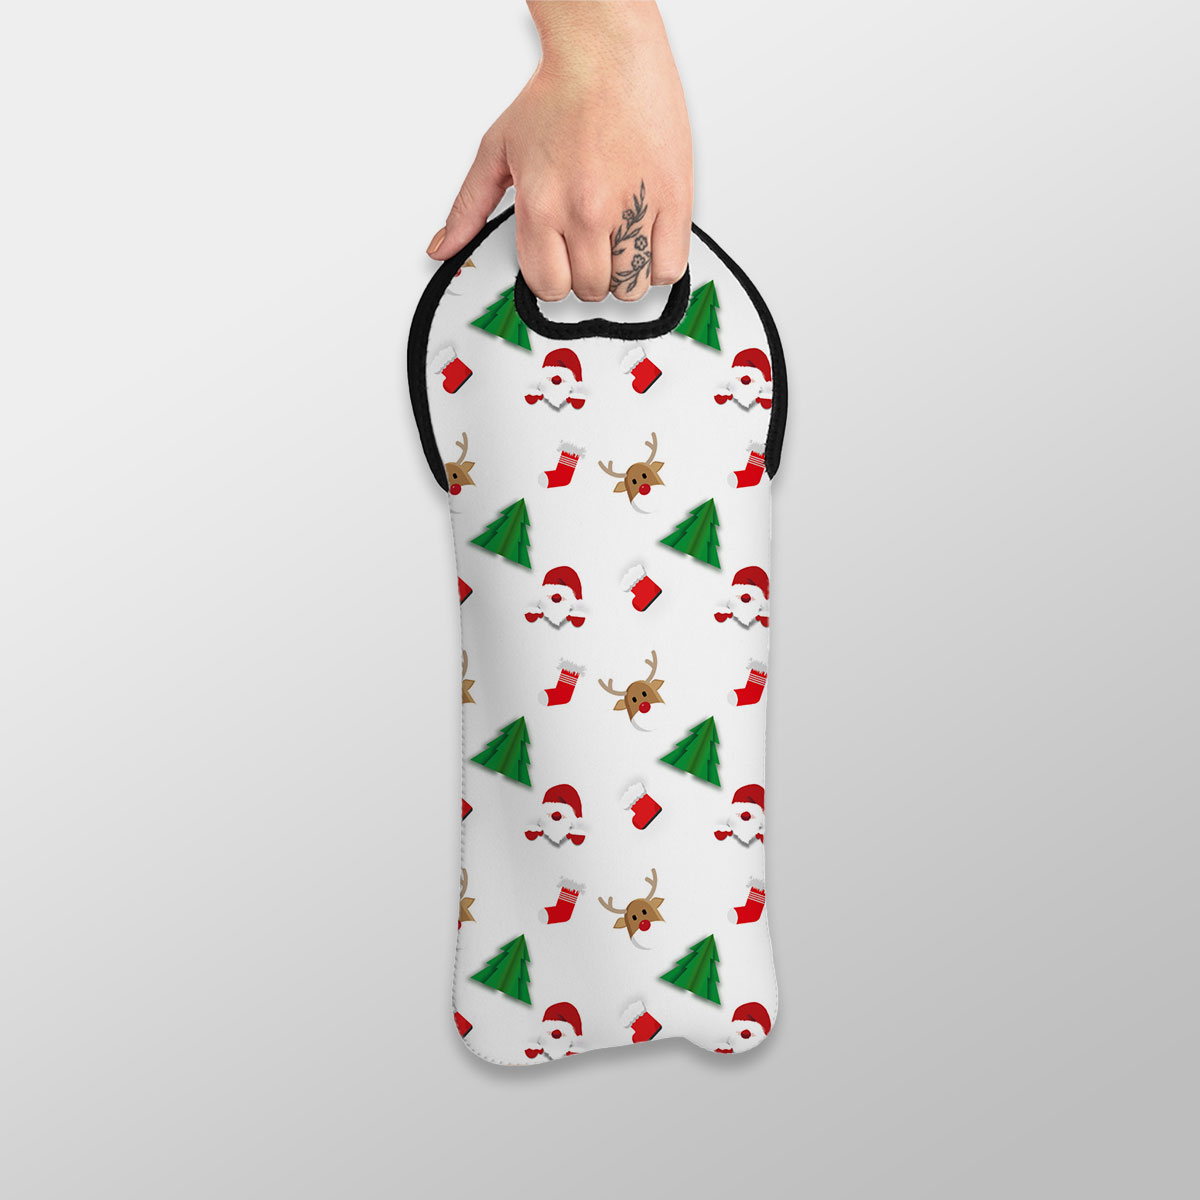 Santa Claus, Pine Tree Silhouette, Christmas Reindeer And Red Socks Seamless Pattern Wine Tote Bag